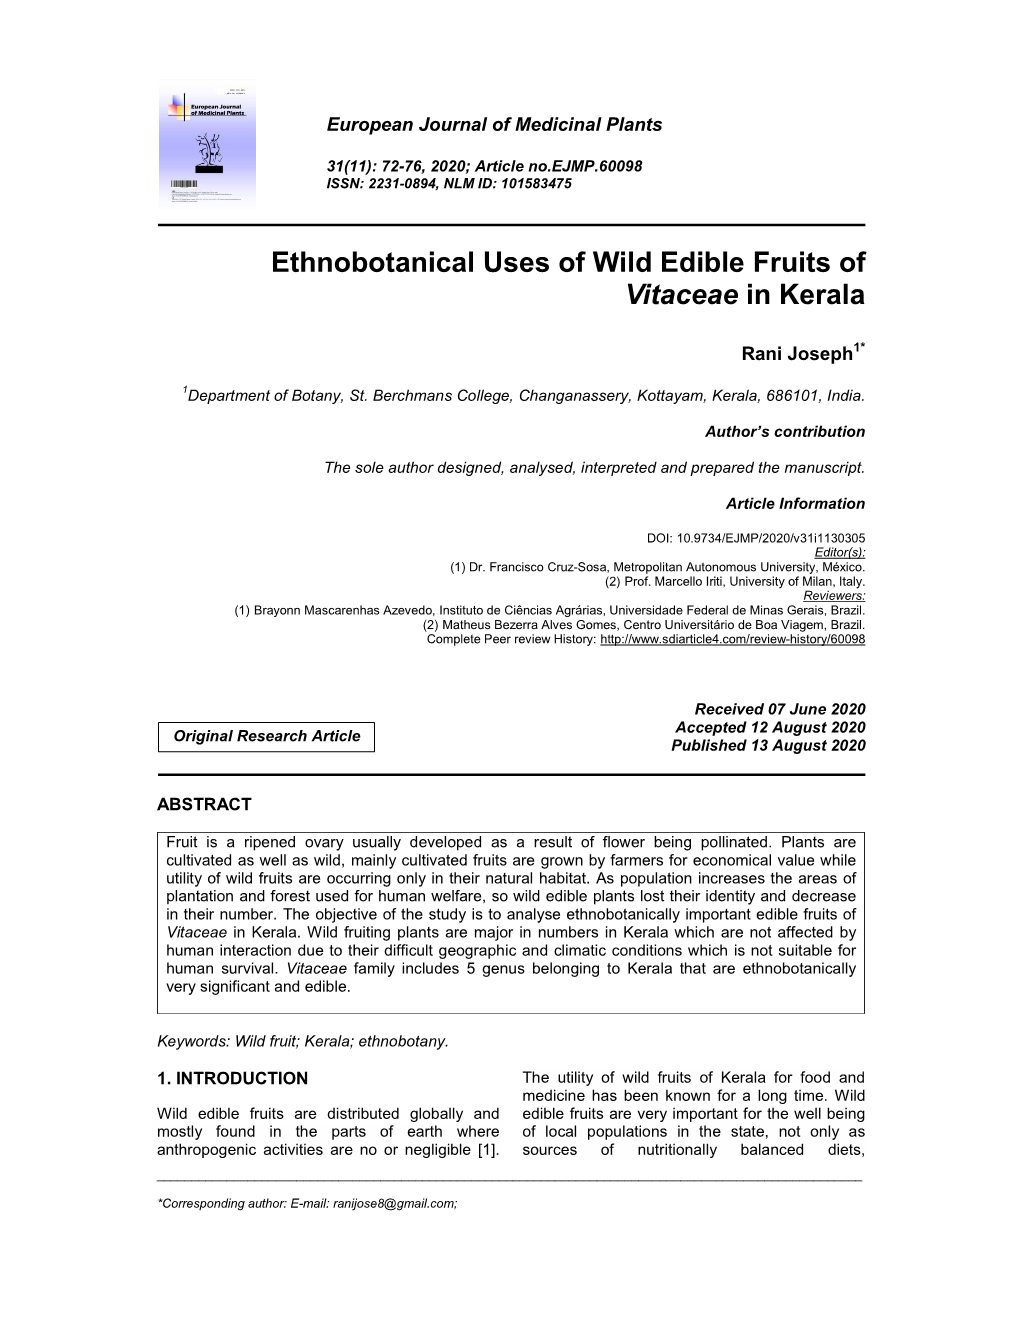 Ethnobotanical Uses of Wild Edible Fruits of Vitaceae in Kerala